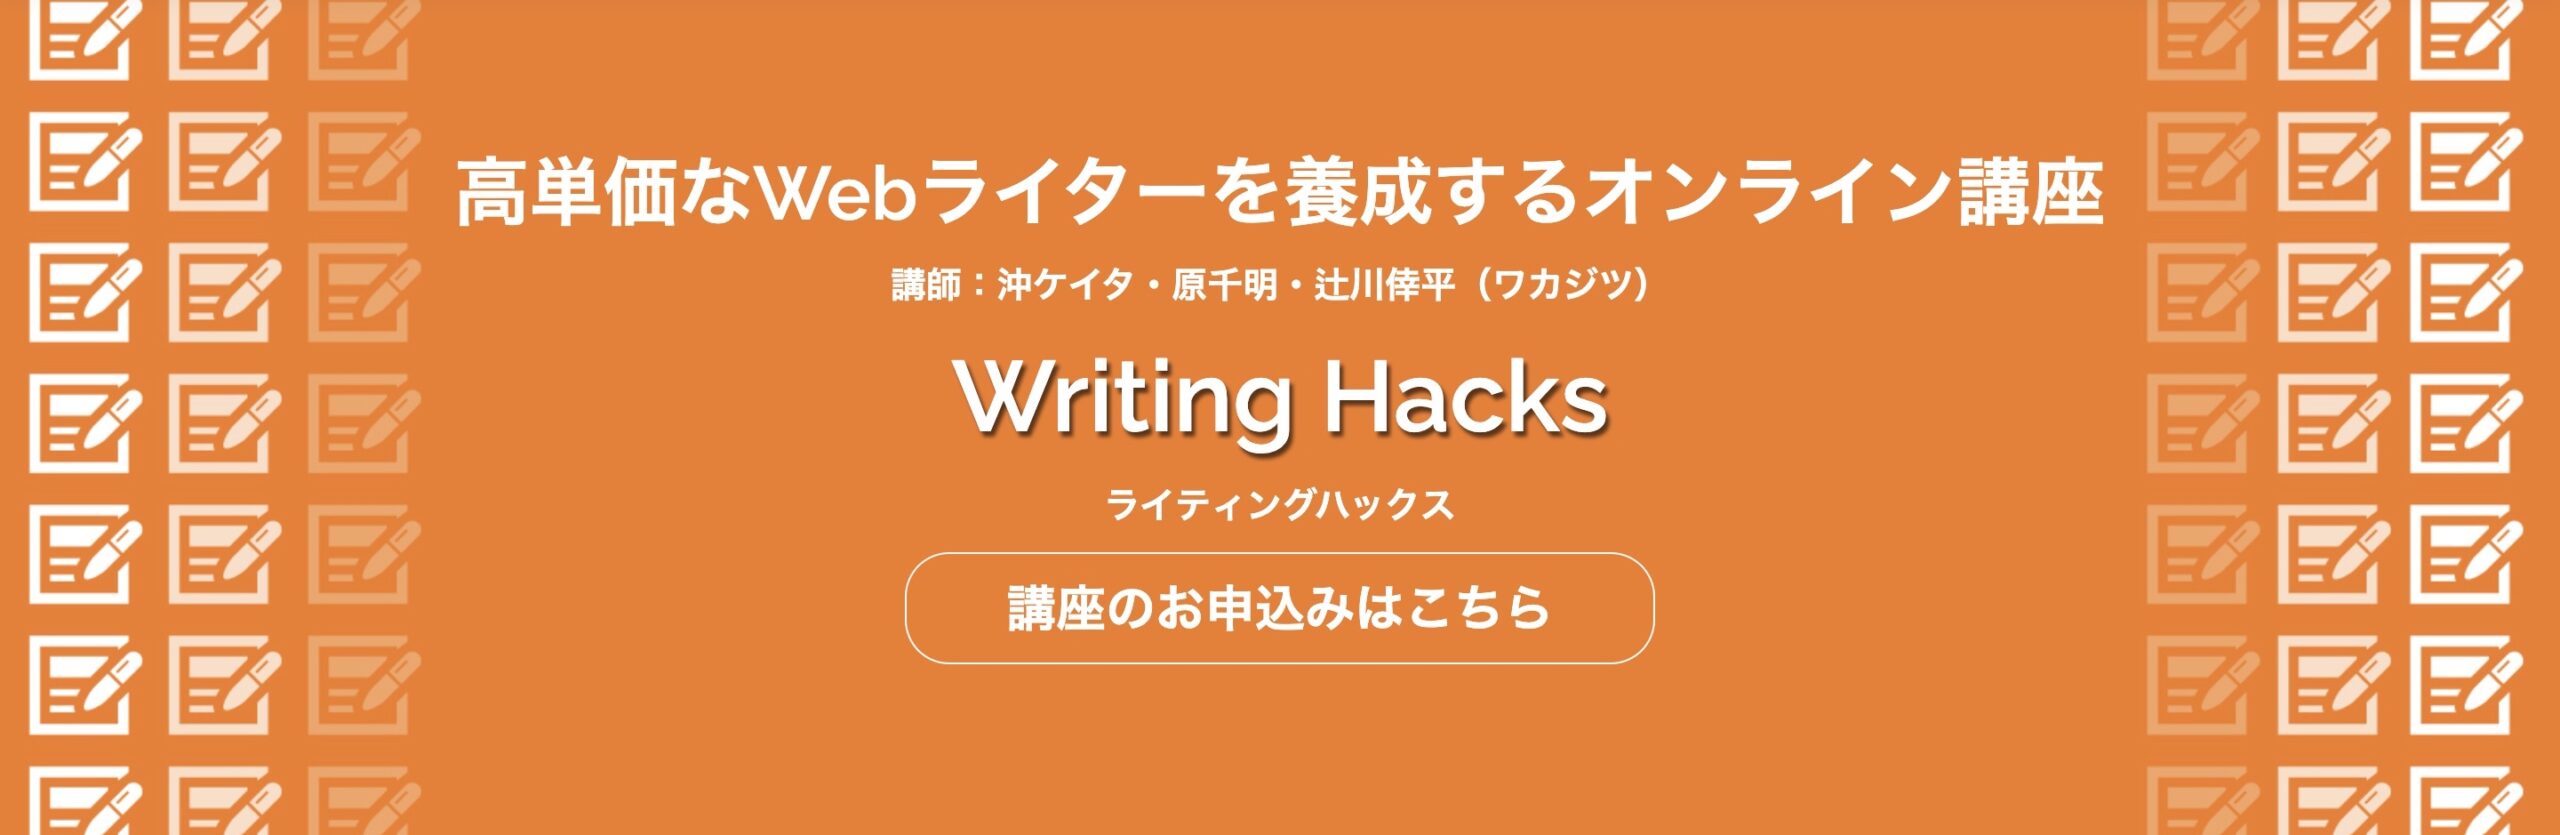 Webライター初心者におすすめの学習方法③Writing Hacks(ライティングハックス)